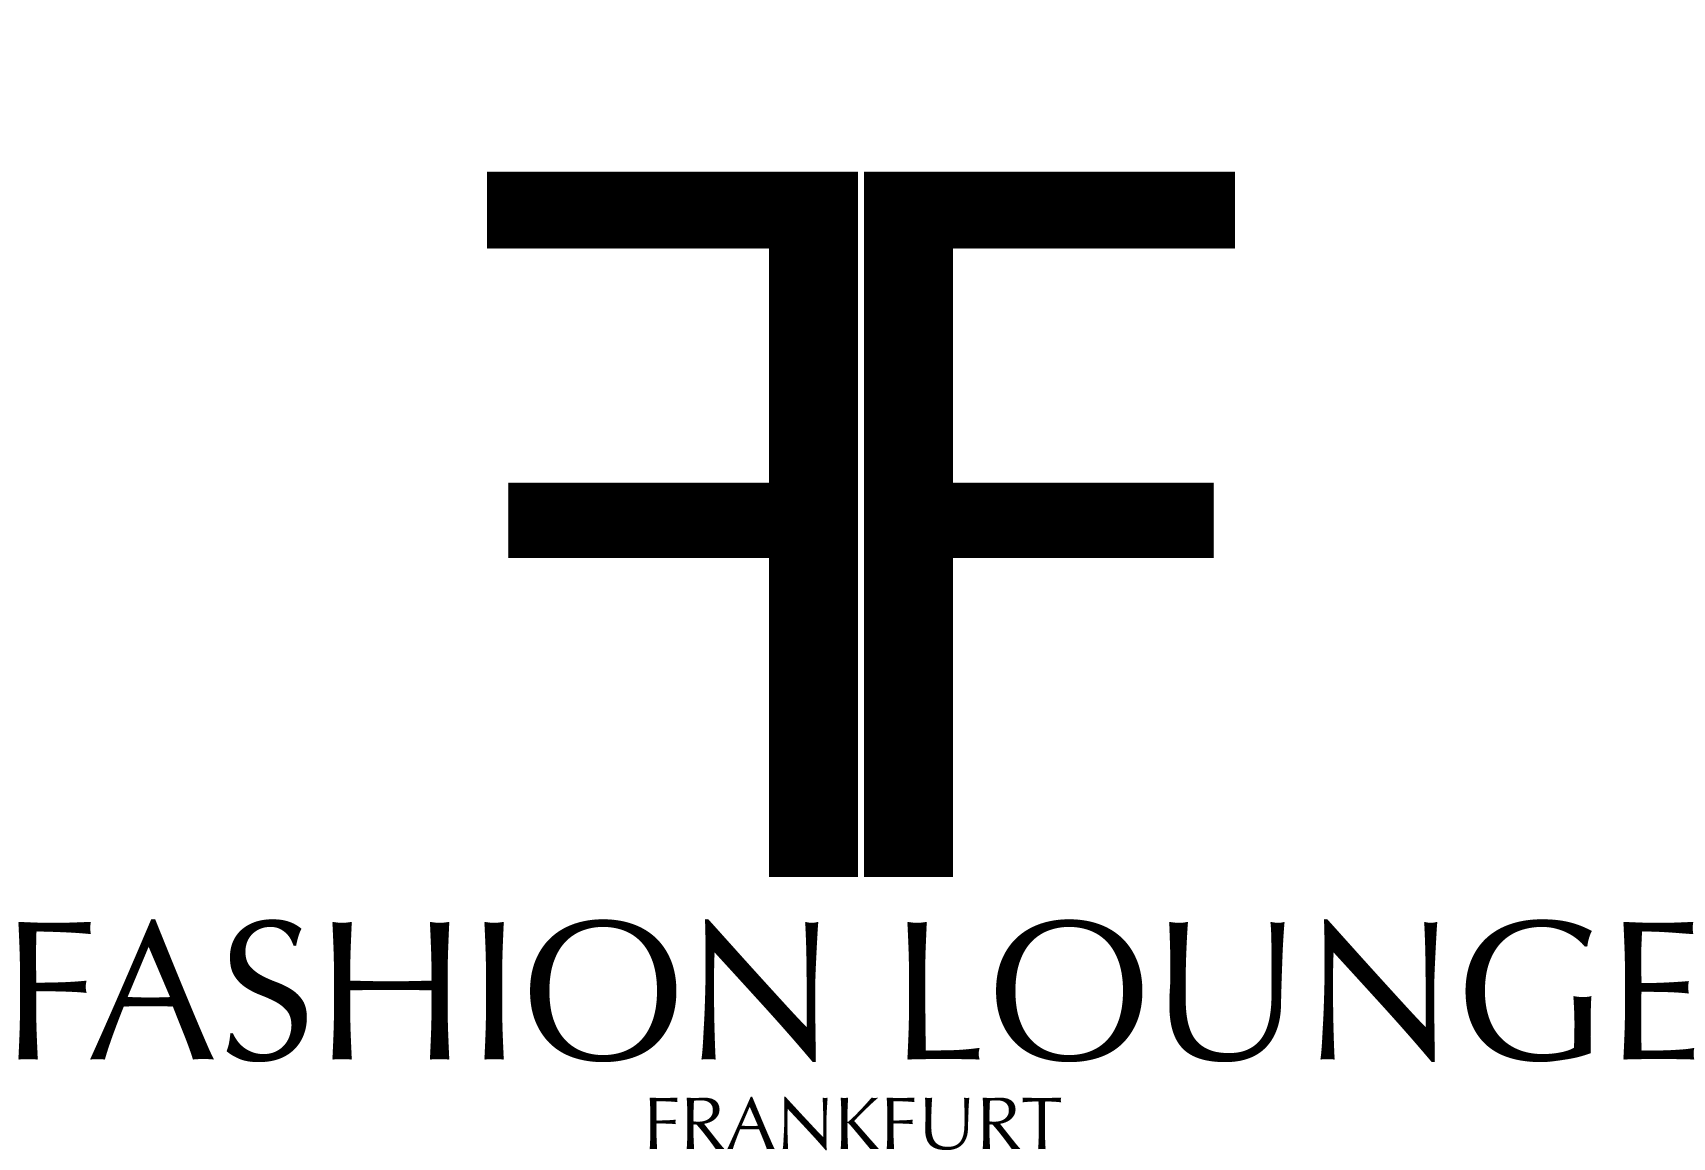 Frankfurt Fashion Lounge Logo